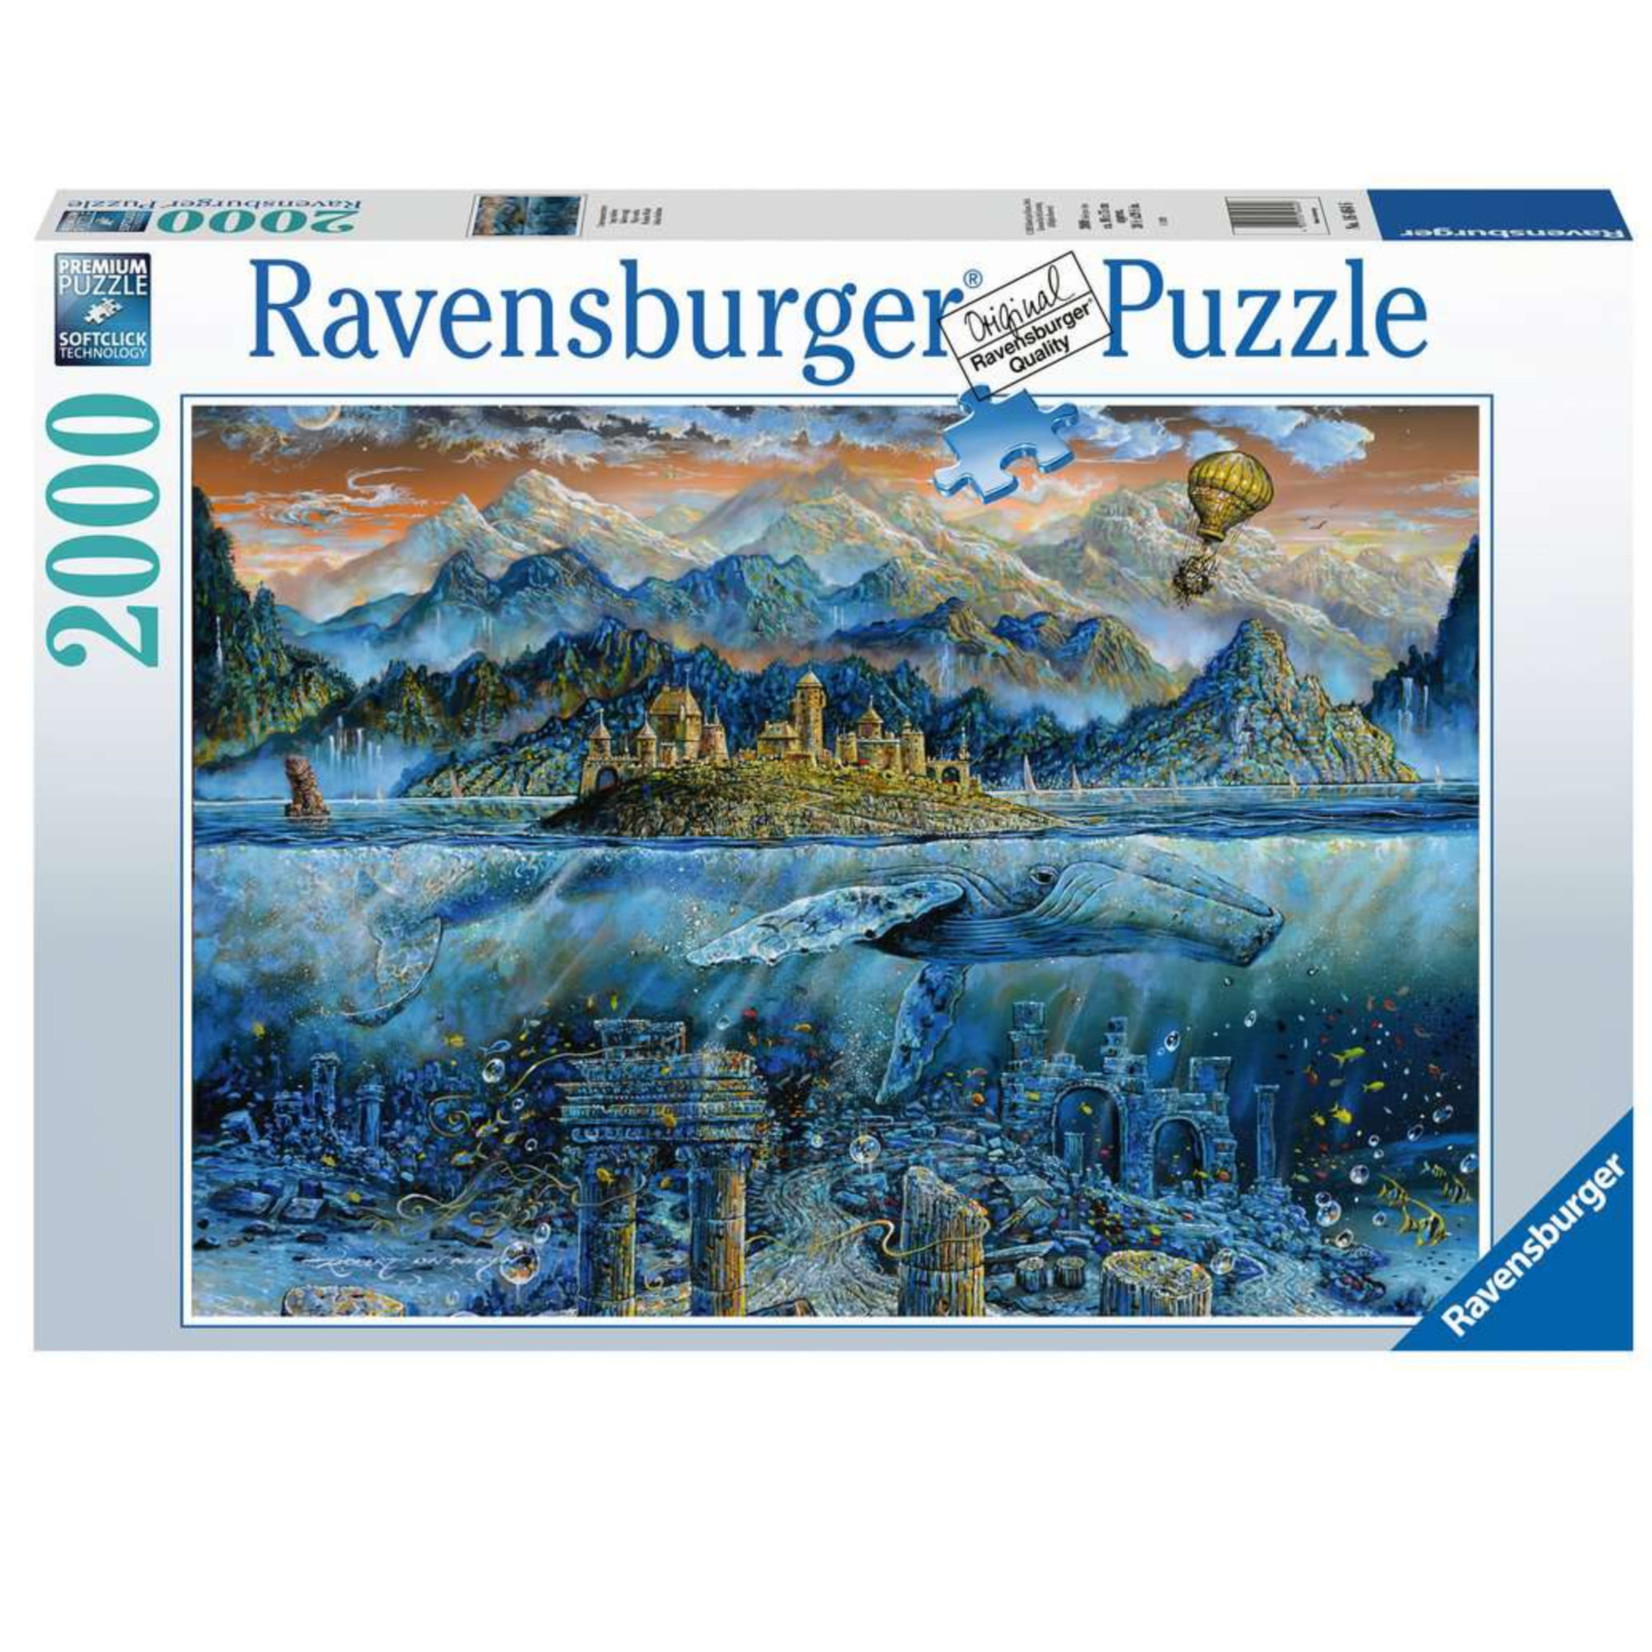 Ravensburger Puzzle 2000: Sage baleine